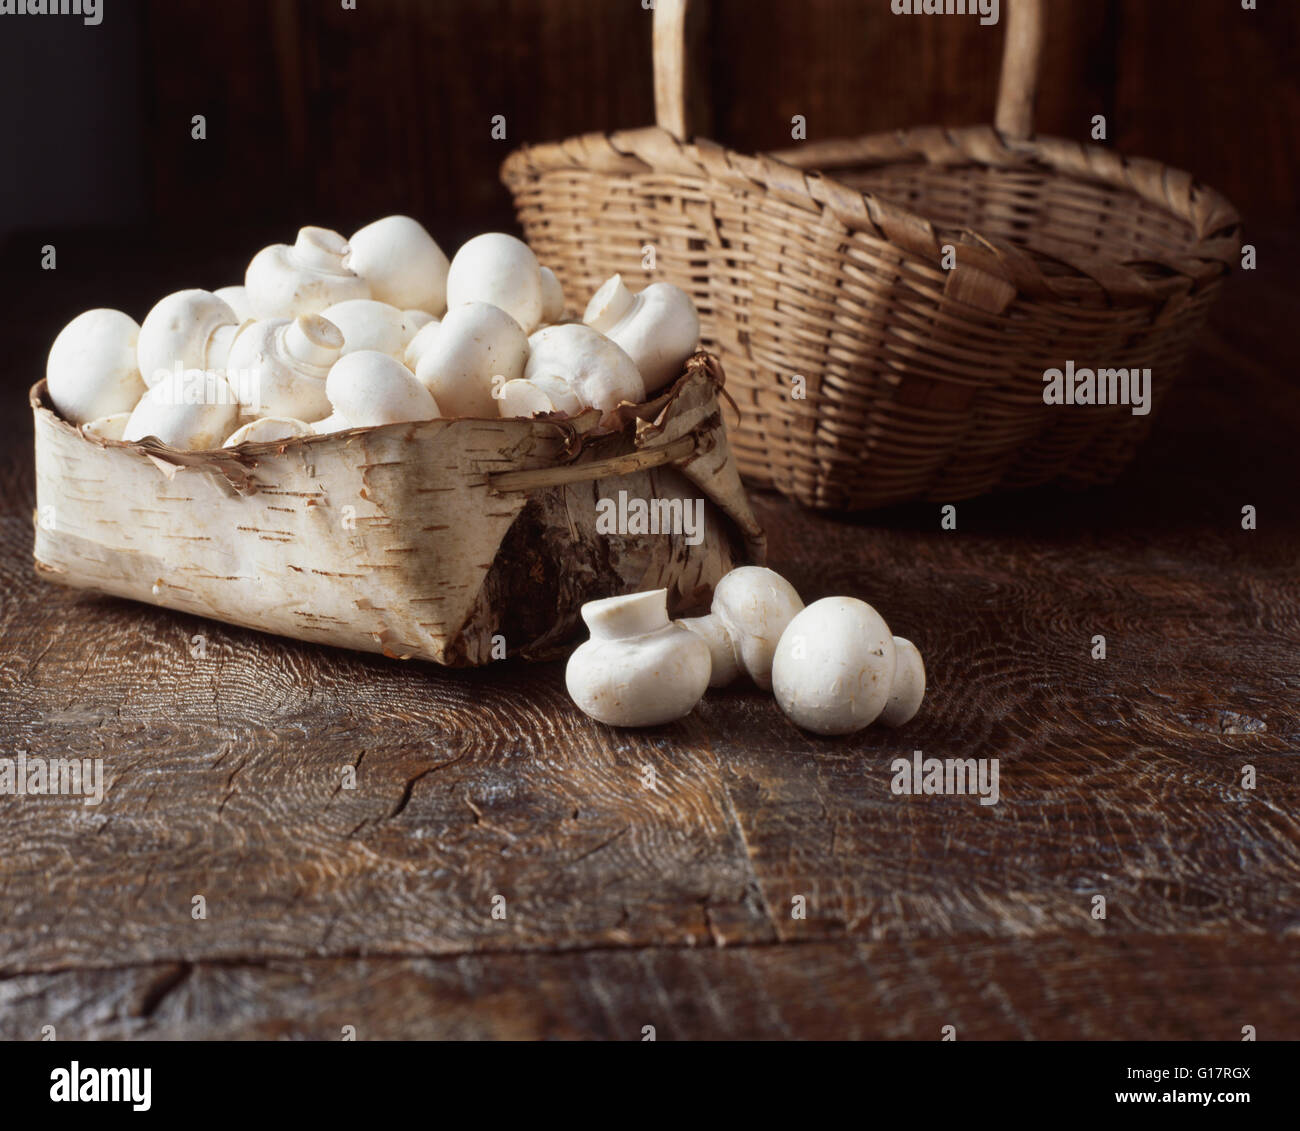 Mushrooms in vintage wooden basket Stock Photo